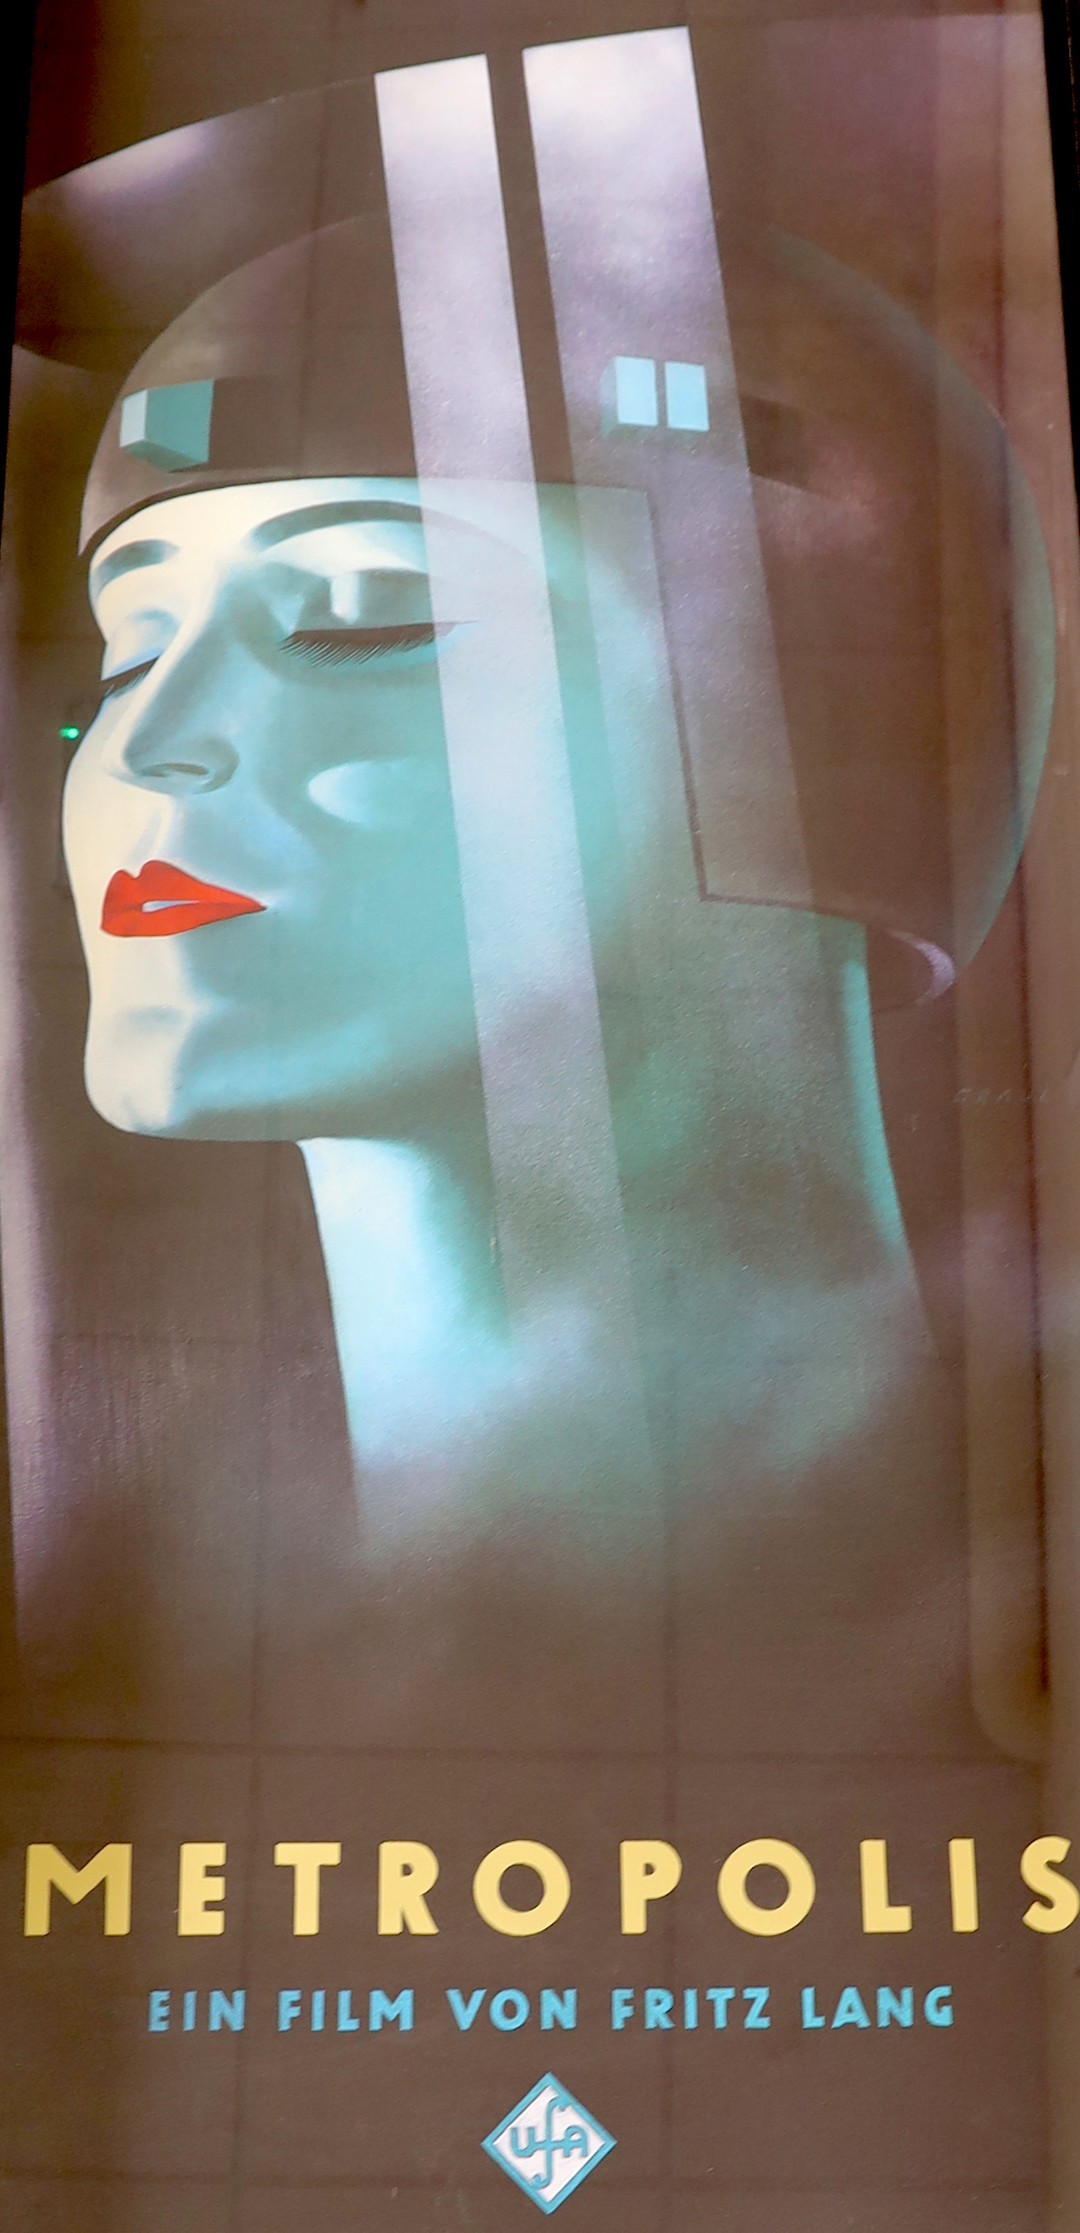 After Werner Graul, colour print, Fil, poster for Metropolis, 179 x 82cm